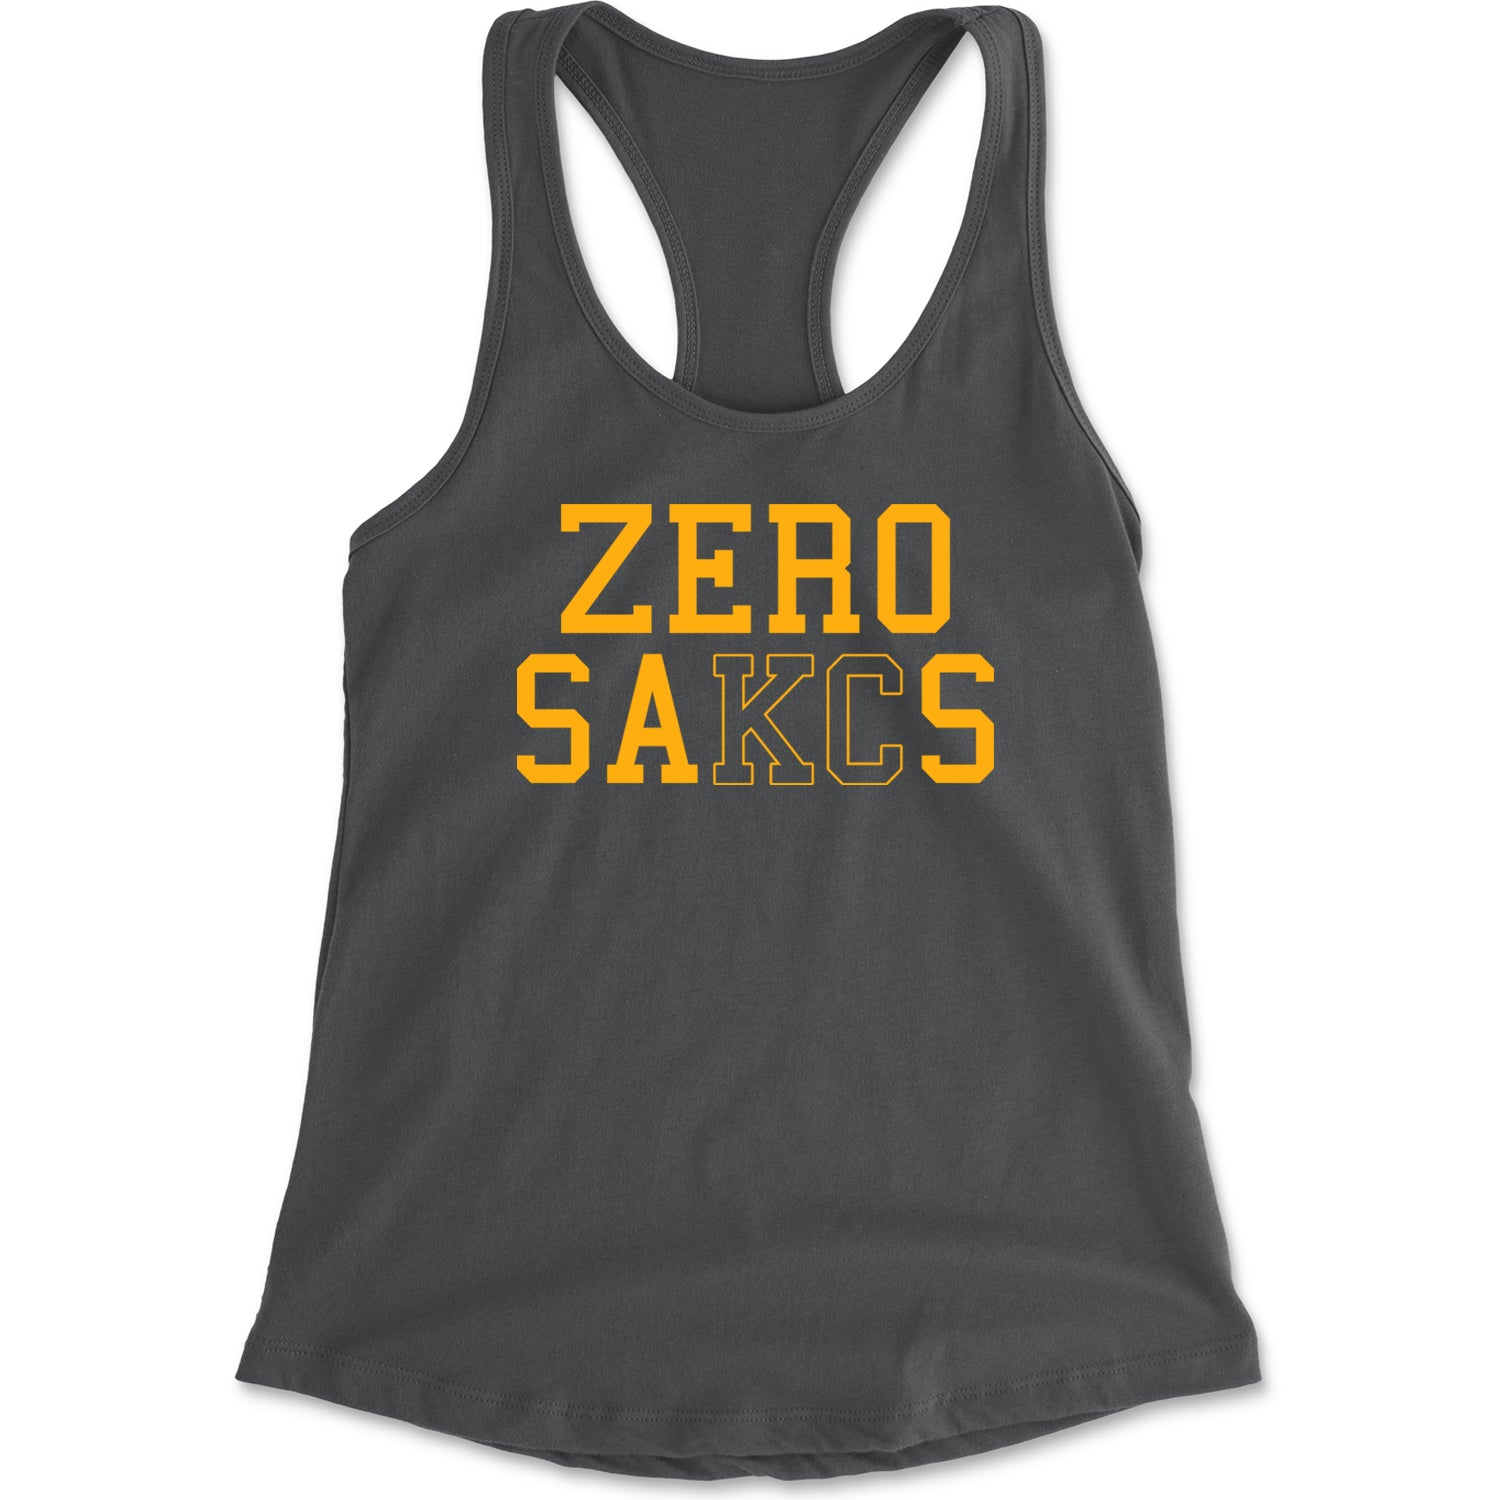 Zero Sacks Kansas City Racerback Tank Top for Women ball, brown, foot, football, kelc, orlando, patrick, sacks, sakcs by Expression Tees